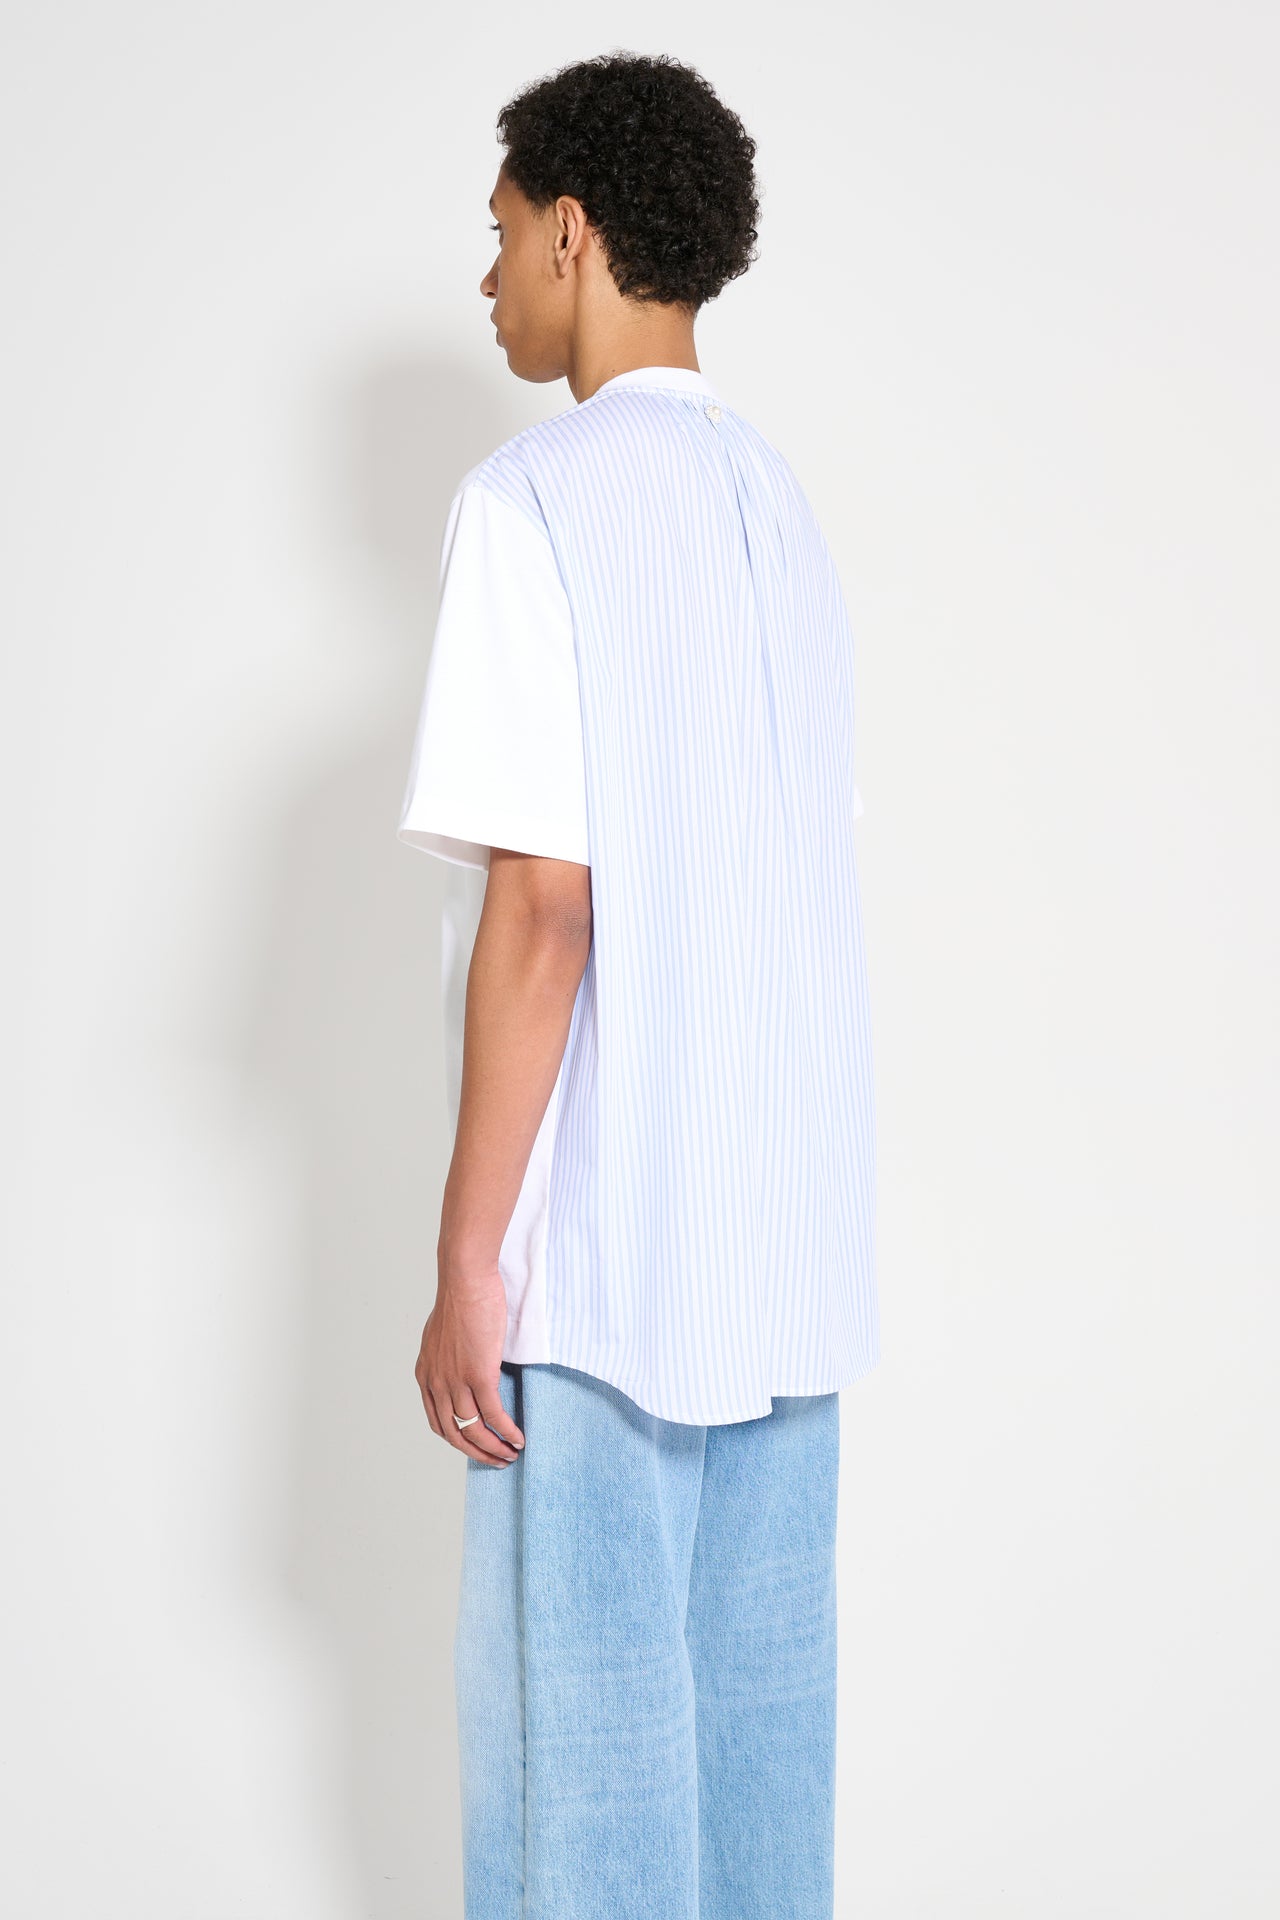 Simone Rocha Short Sleeve Patchwork T-shirt White / Stripes